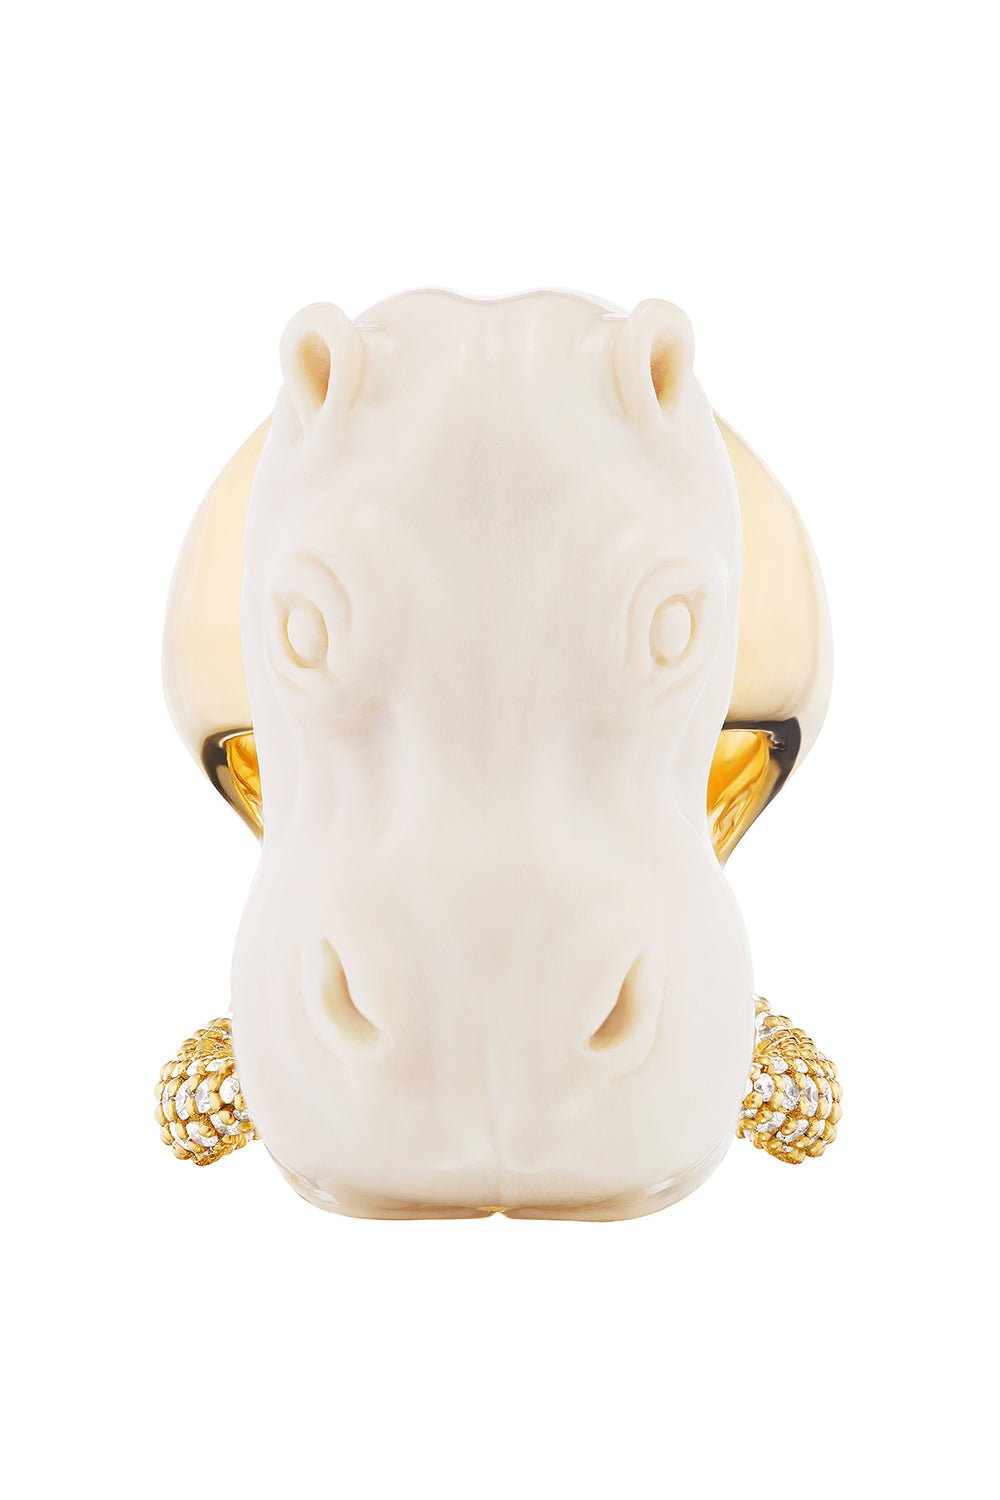 UNIFORM OBJECT-Hippo Ring-YELLOW GOLD